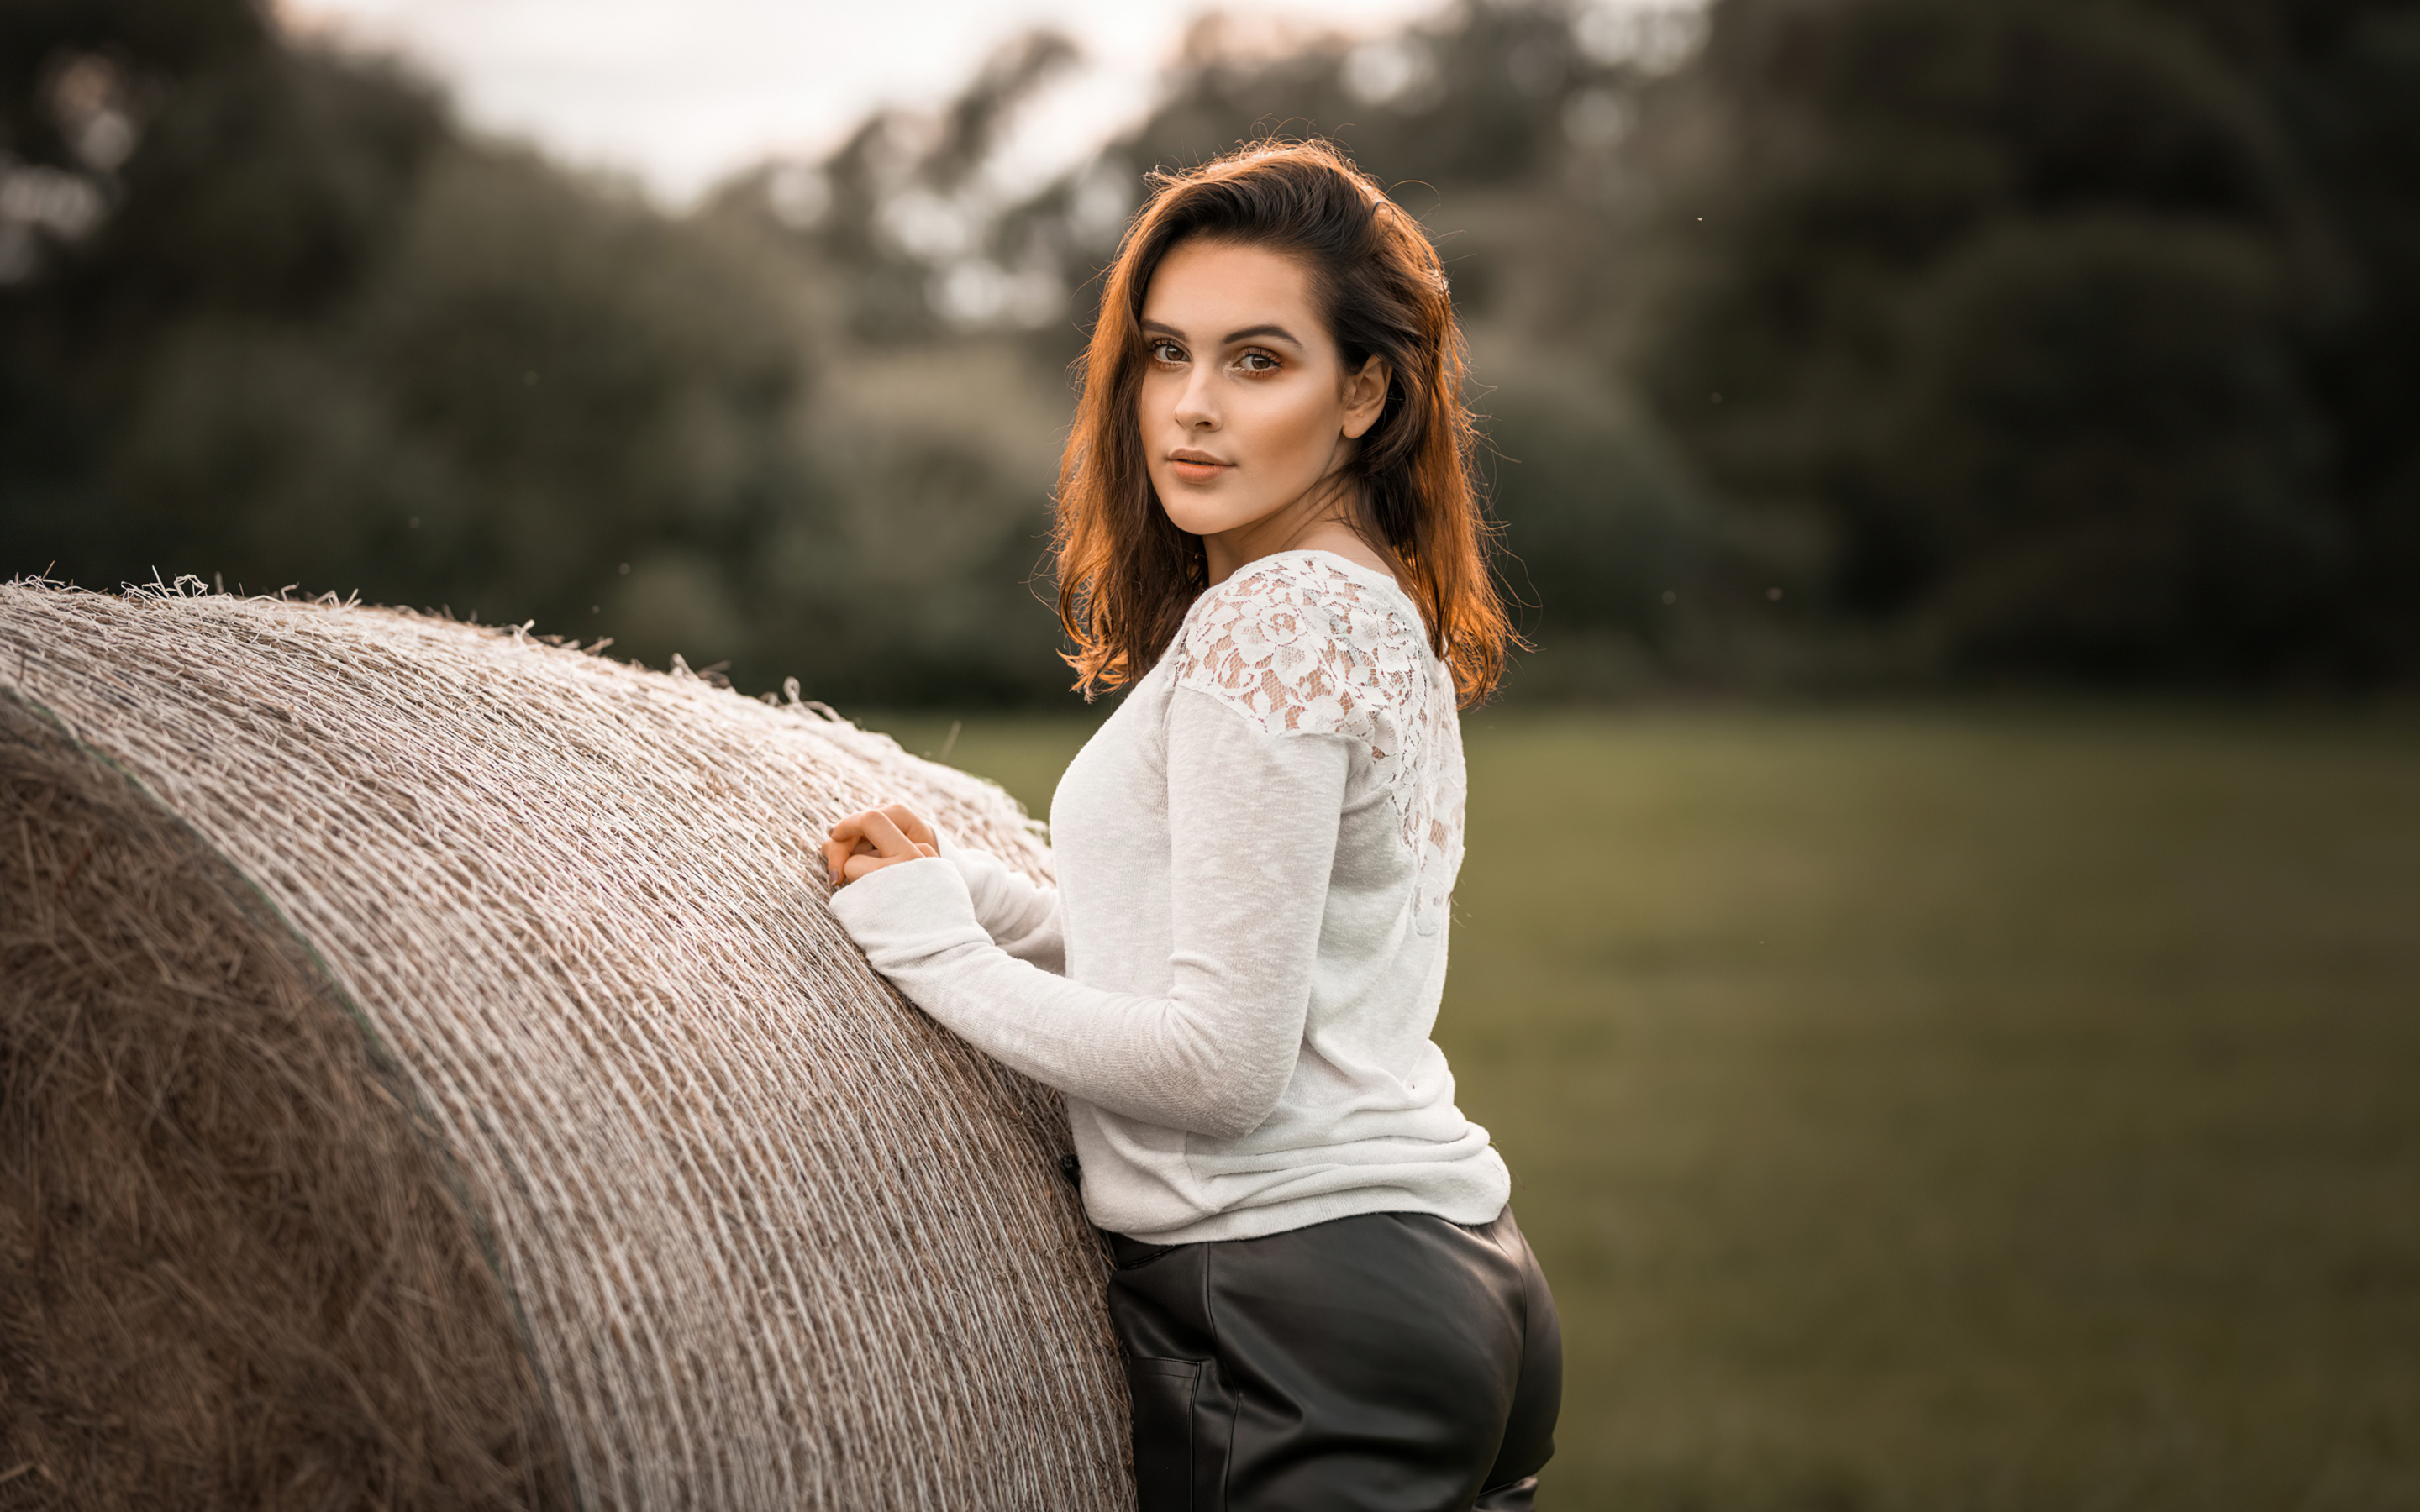 Girl posing at wheat roll, outdoor field, model, 2880x1800 wallpaper